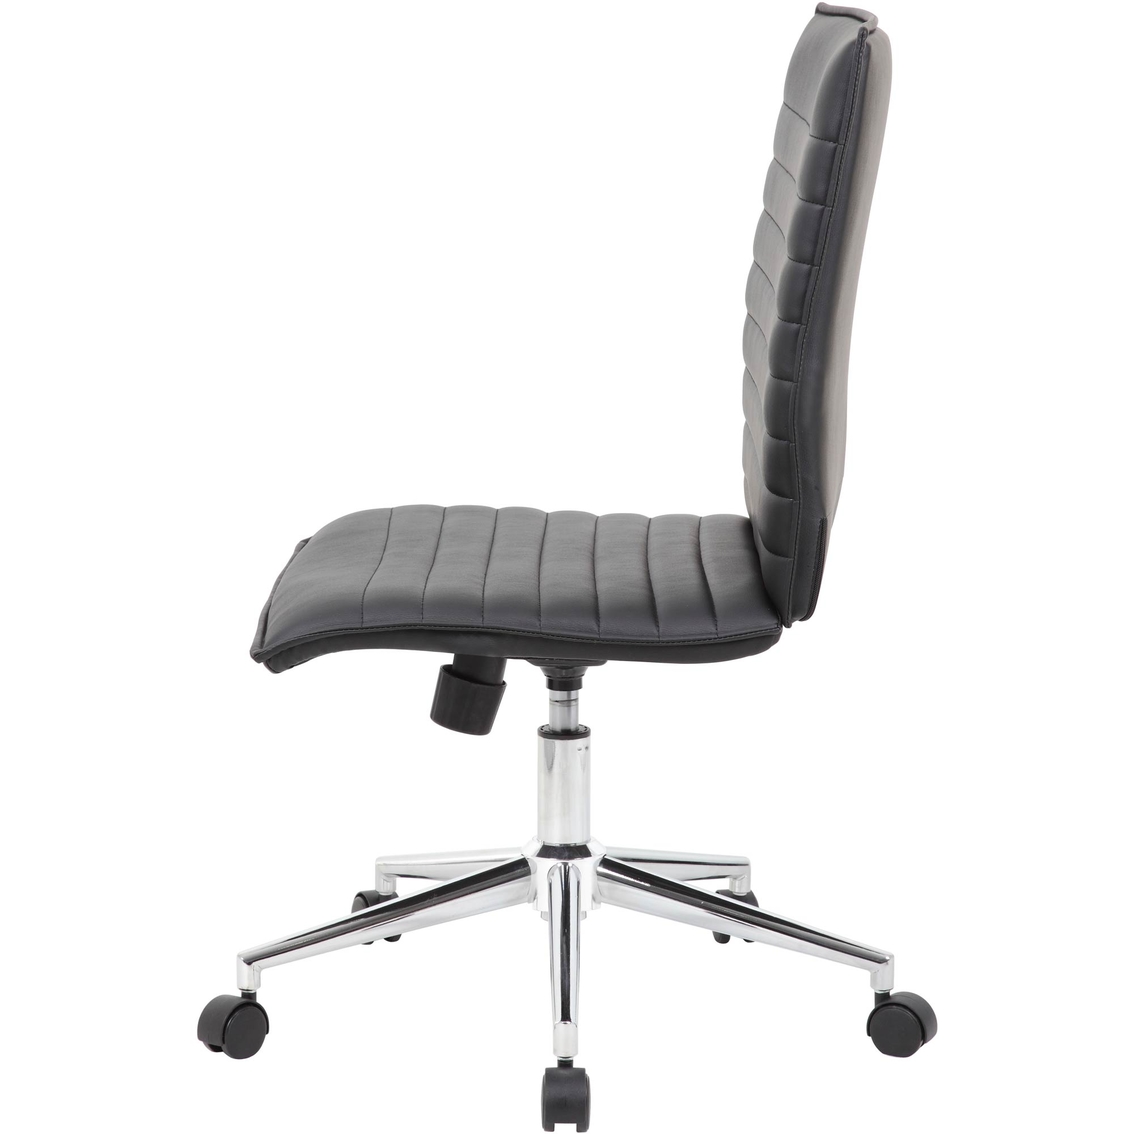 Presidential Seating Swivel Task Chair - Image 6 of 6